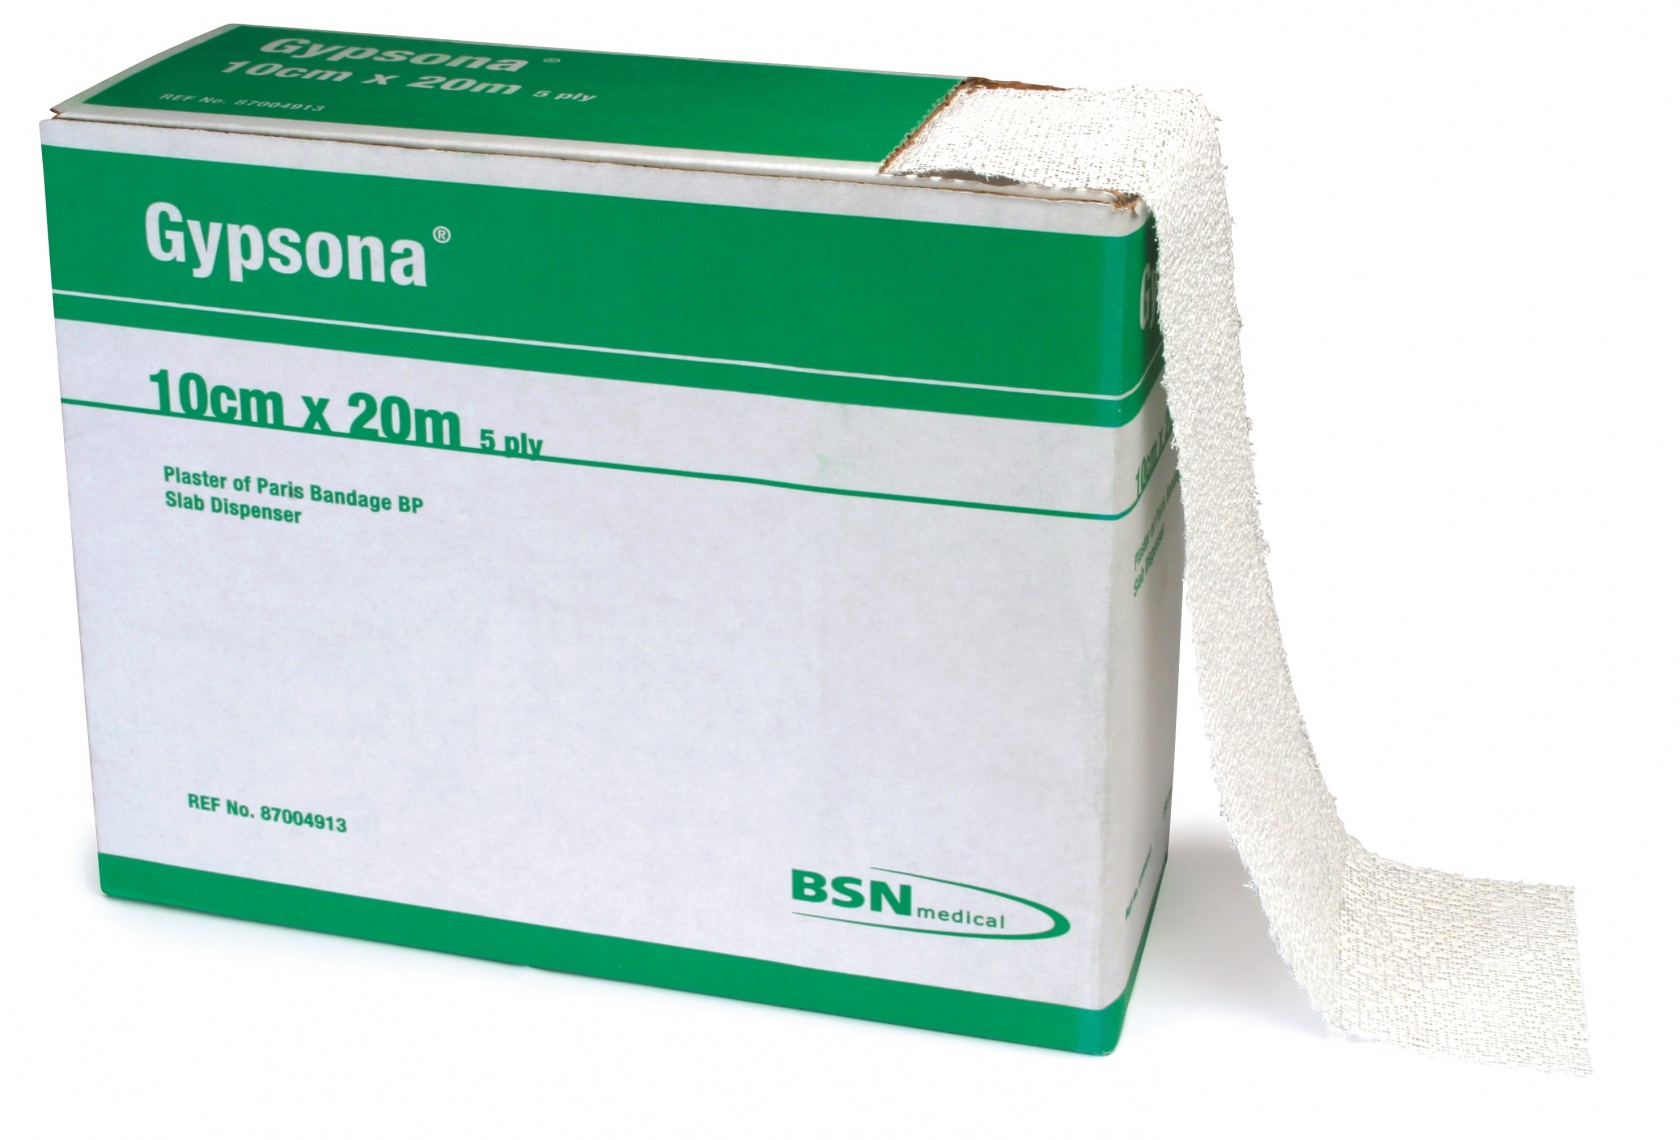 Gypsona Plaster of Paris Bandage Slab Dispenser15cm x 20m image 0